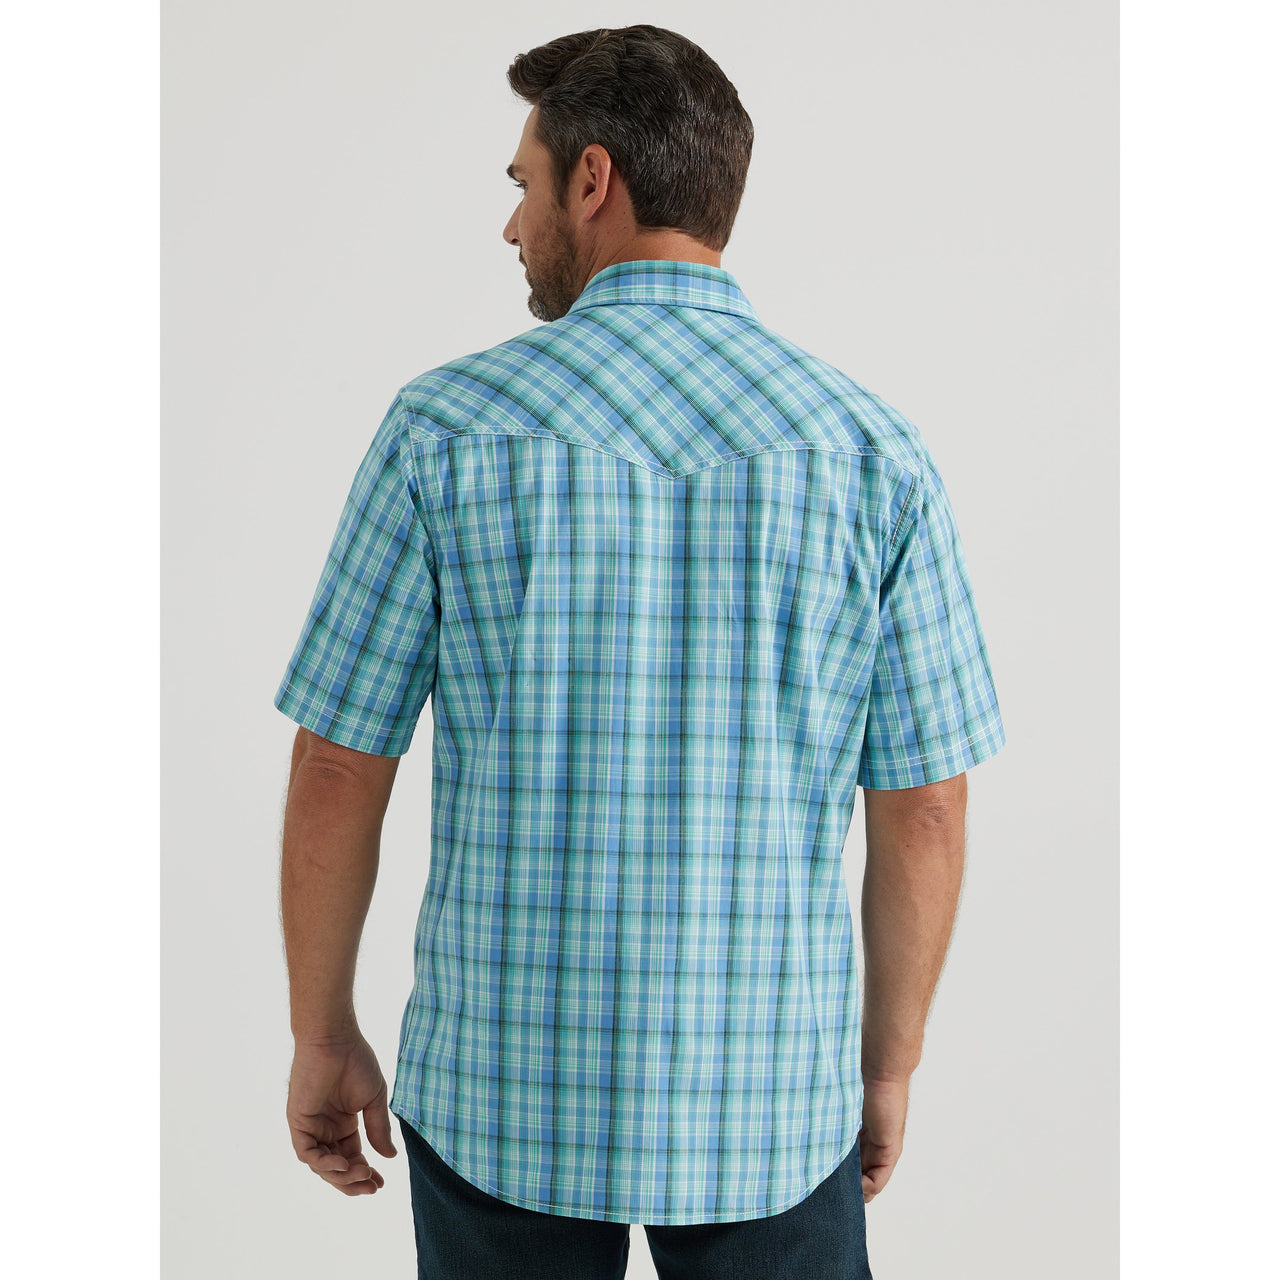 Wrangler Men's 20X Advanced Comfort Short Sleeve Plaid Snap Shirt - Teal